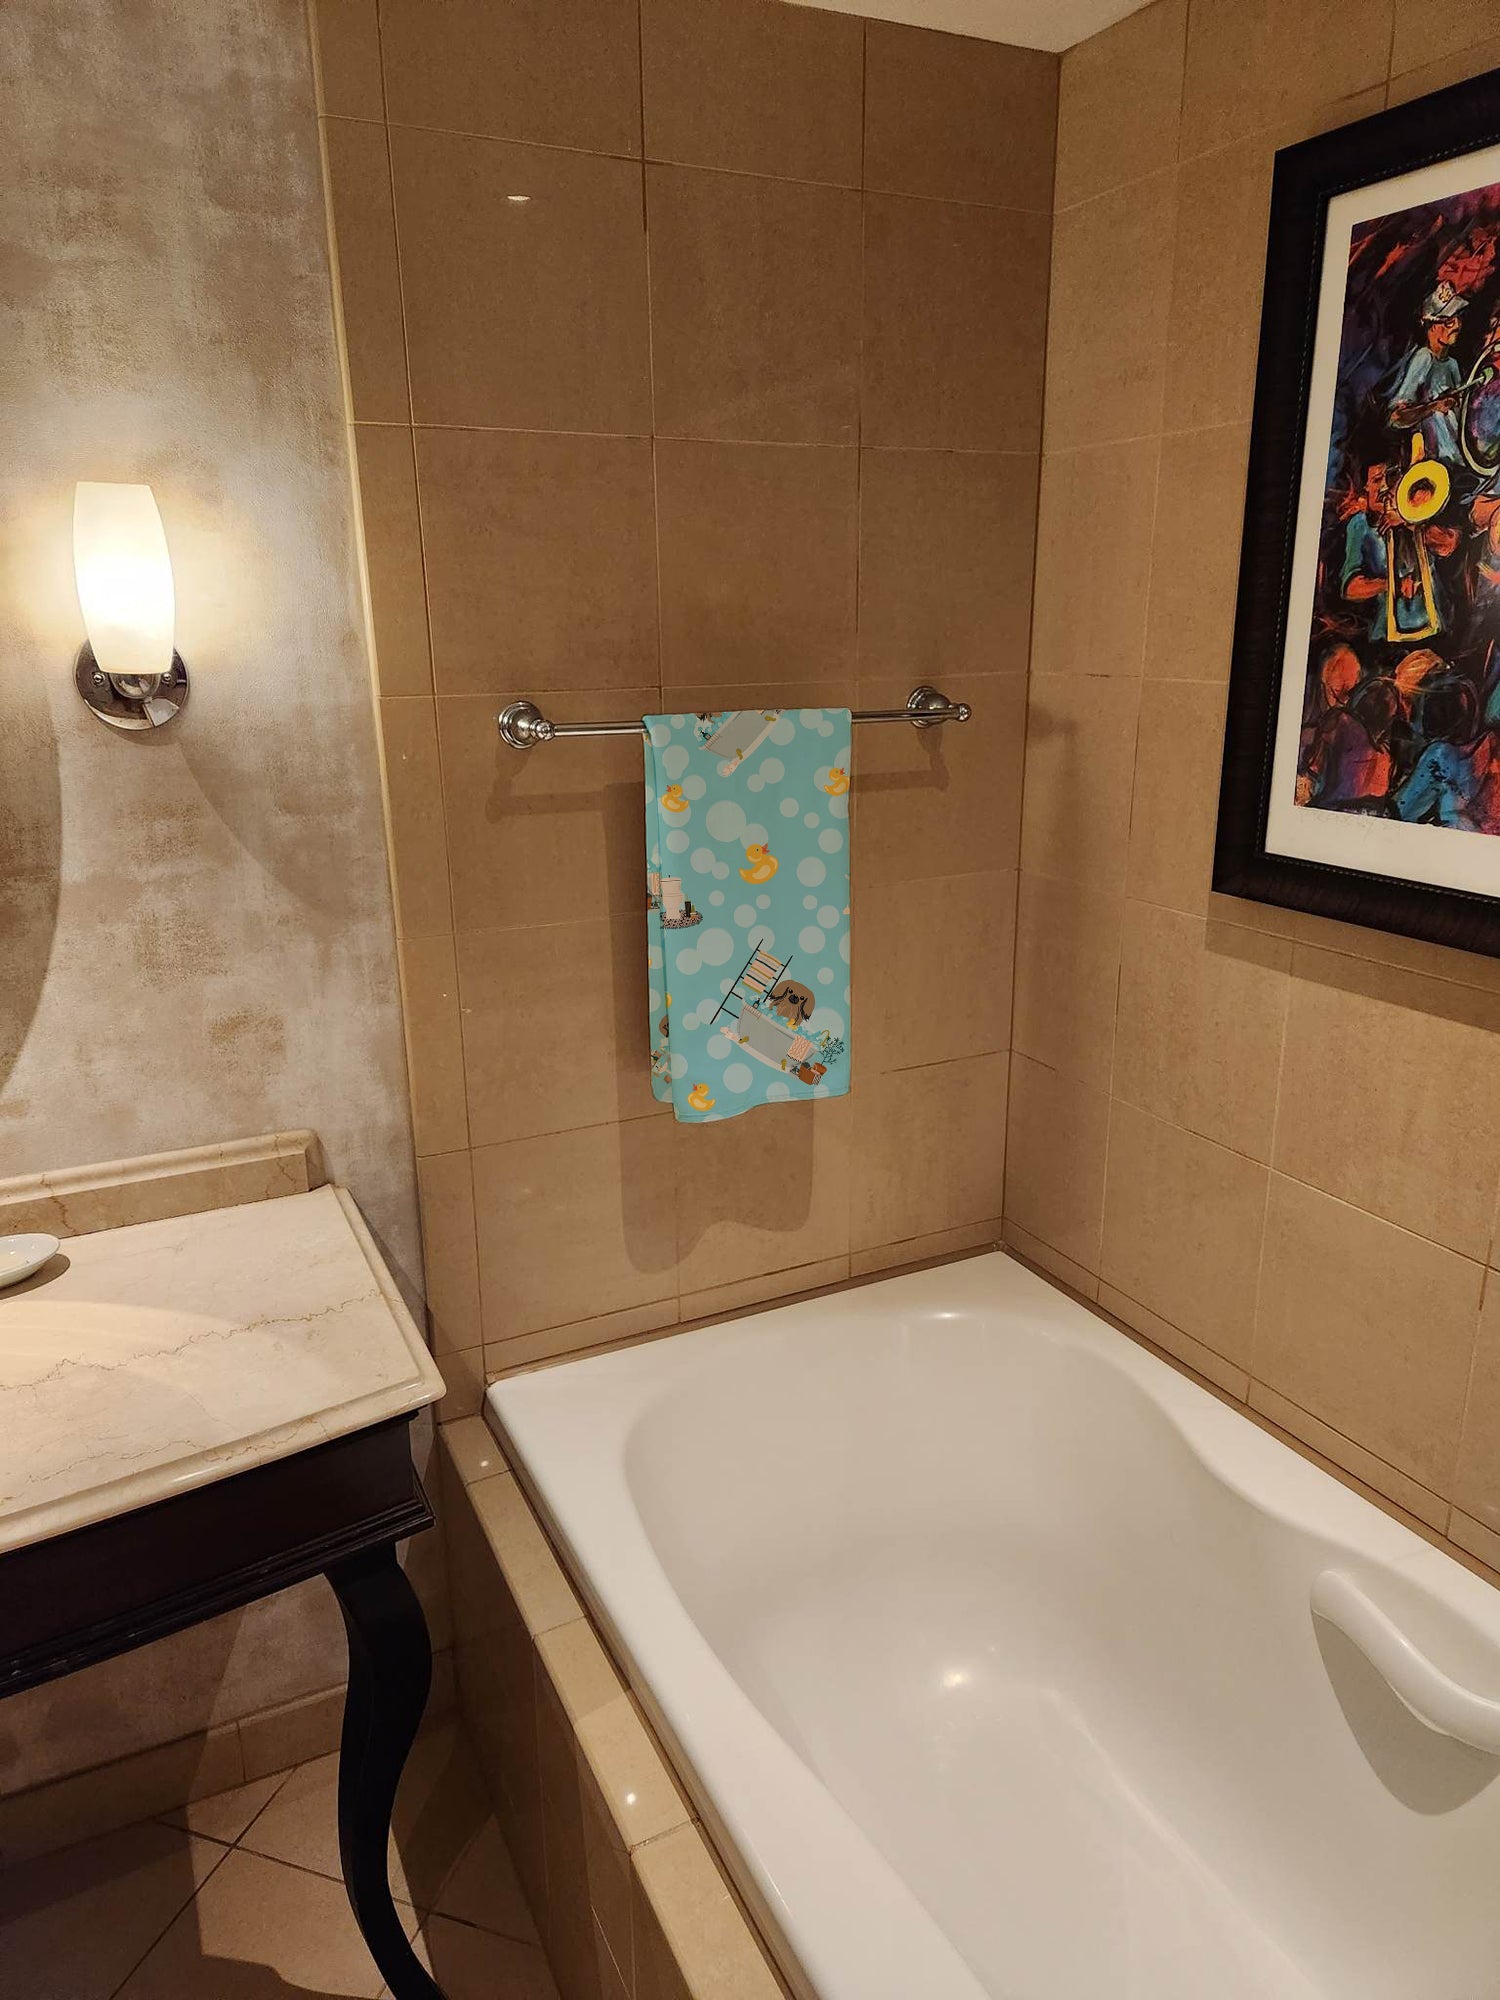 Tan Pekingese in Bathtub Bath Towel Large